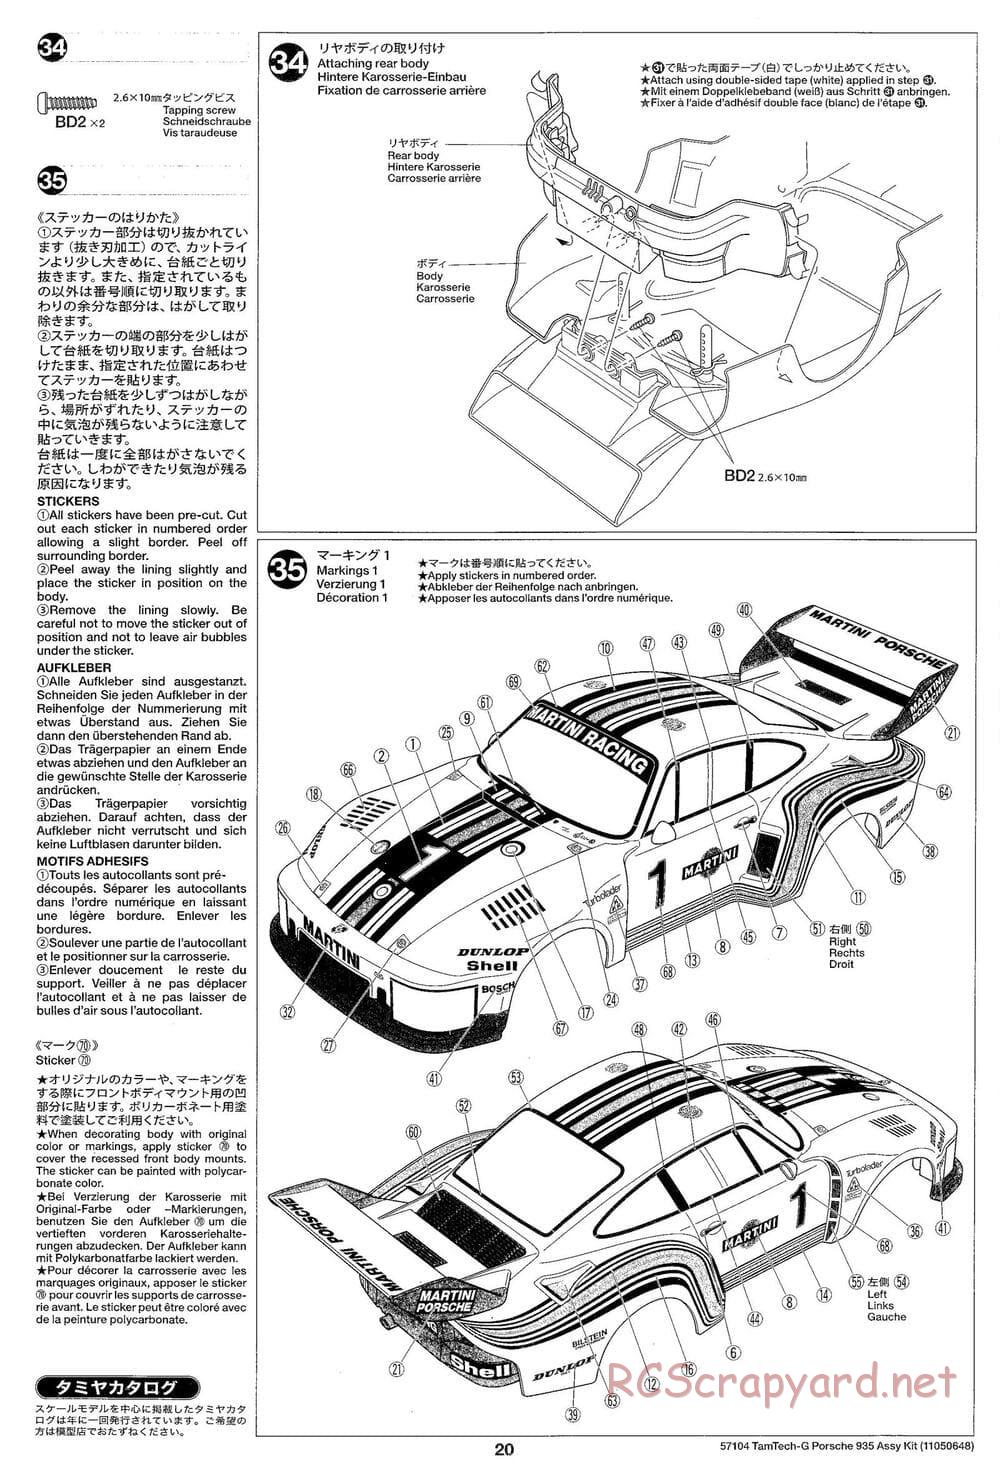 Tamiya - Porsche 935 Martini - GT-01 Chassis - Manual - Page 20